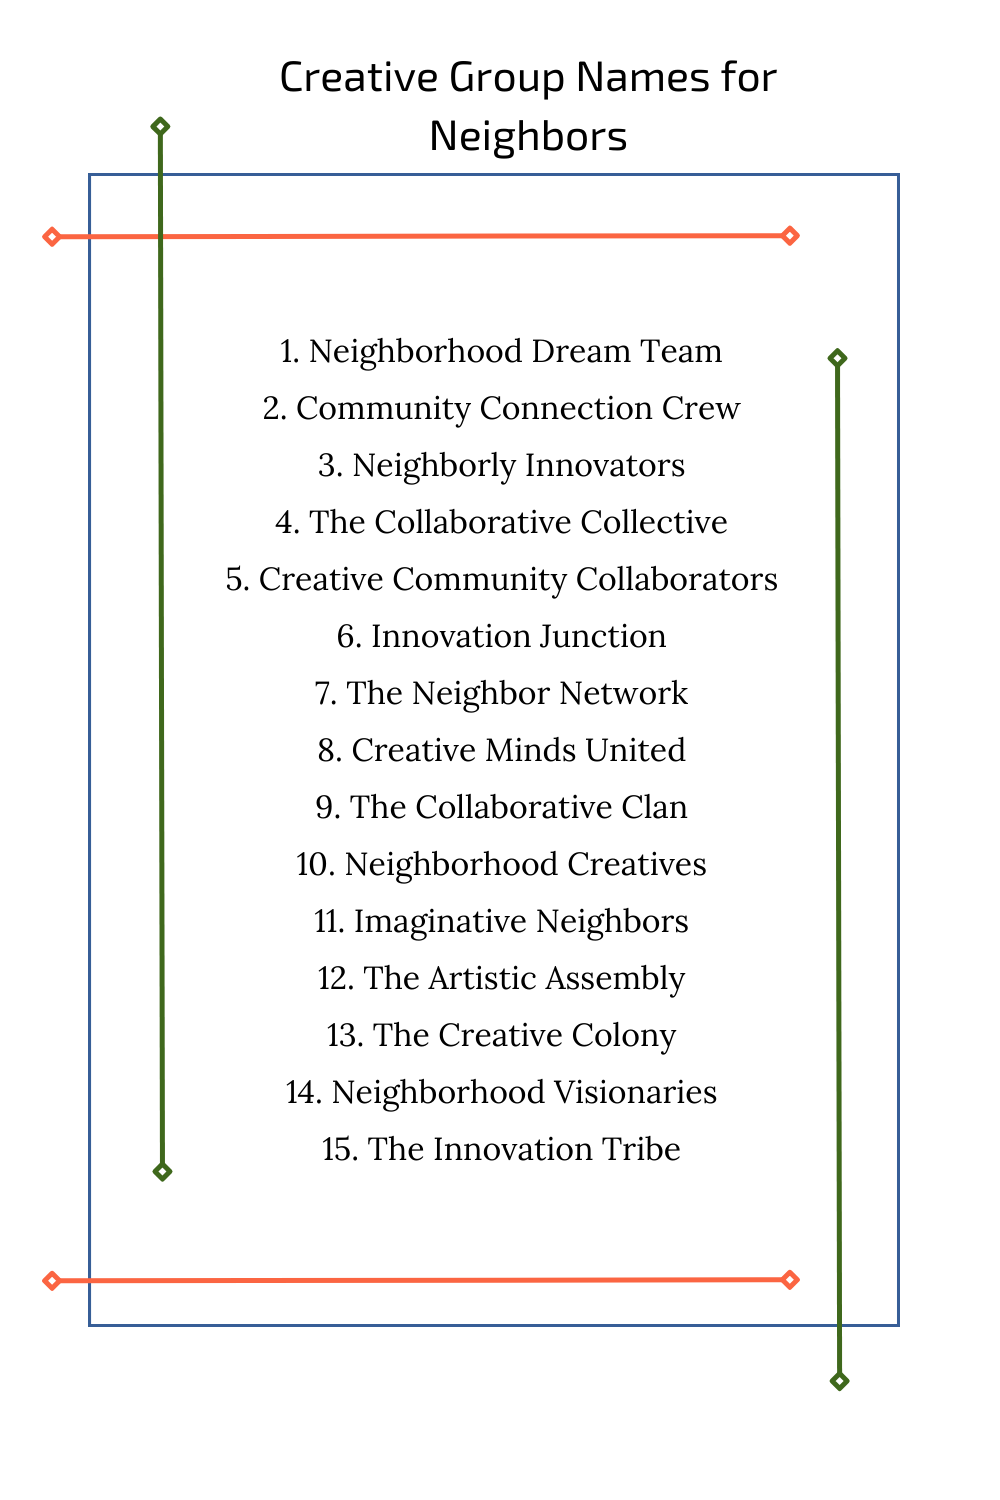 Creative Group Names for Neighbors